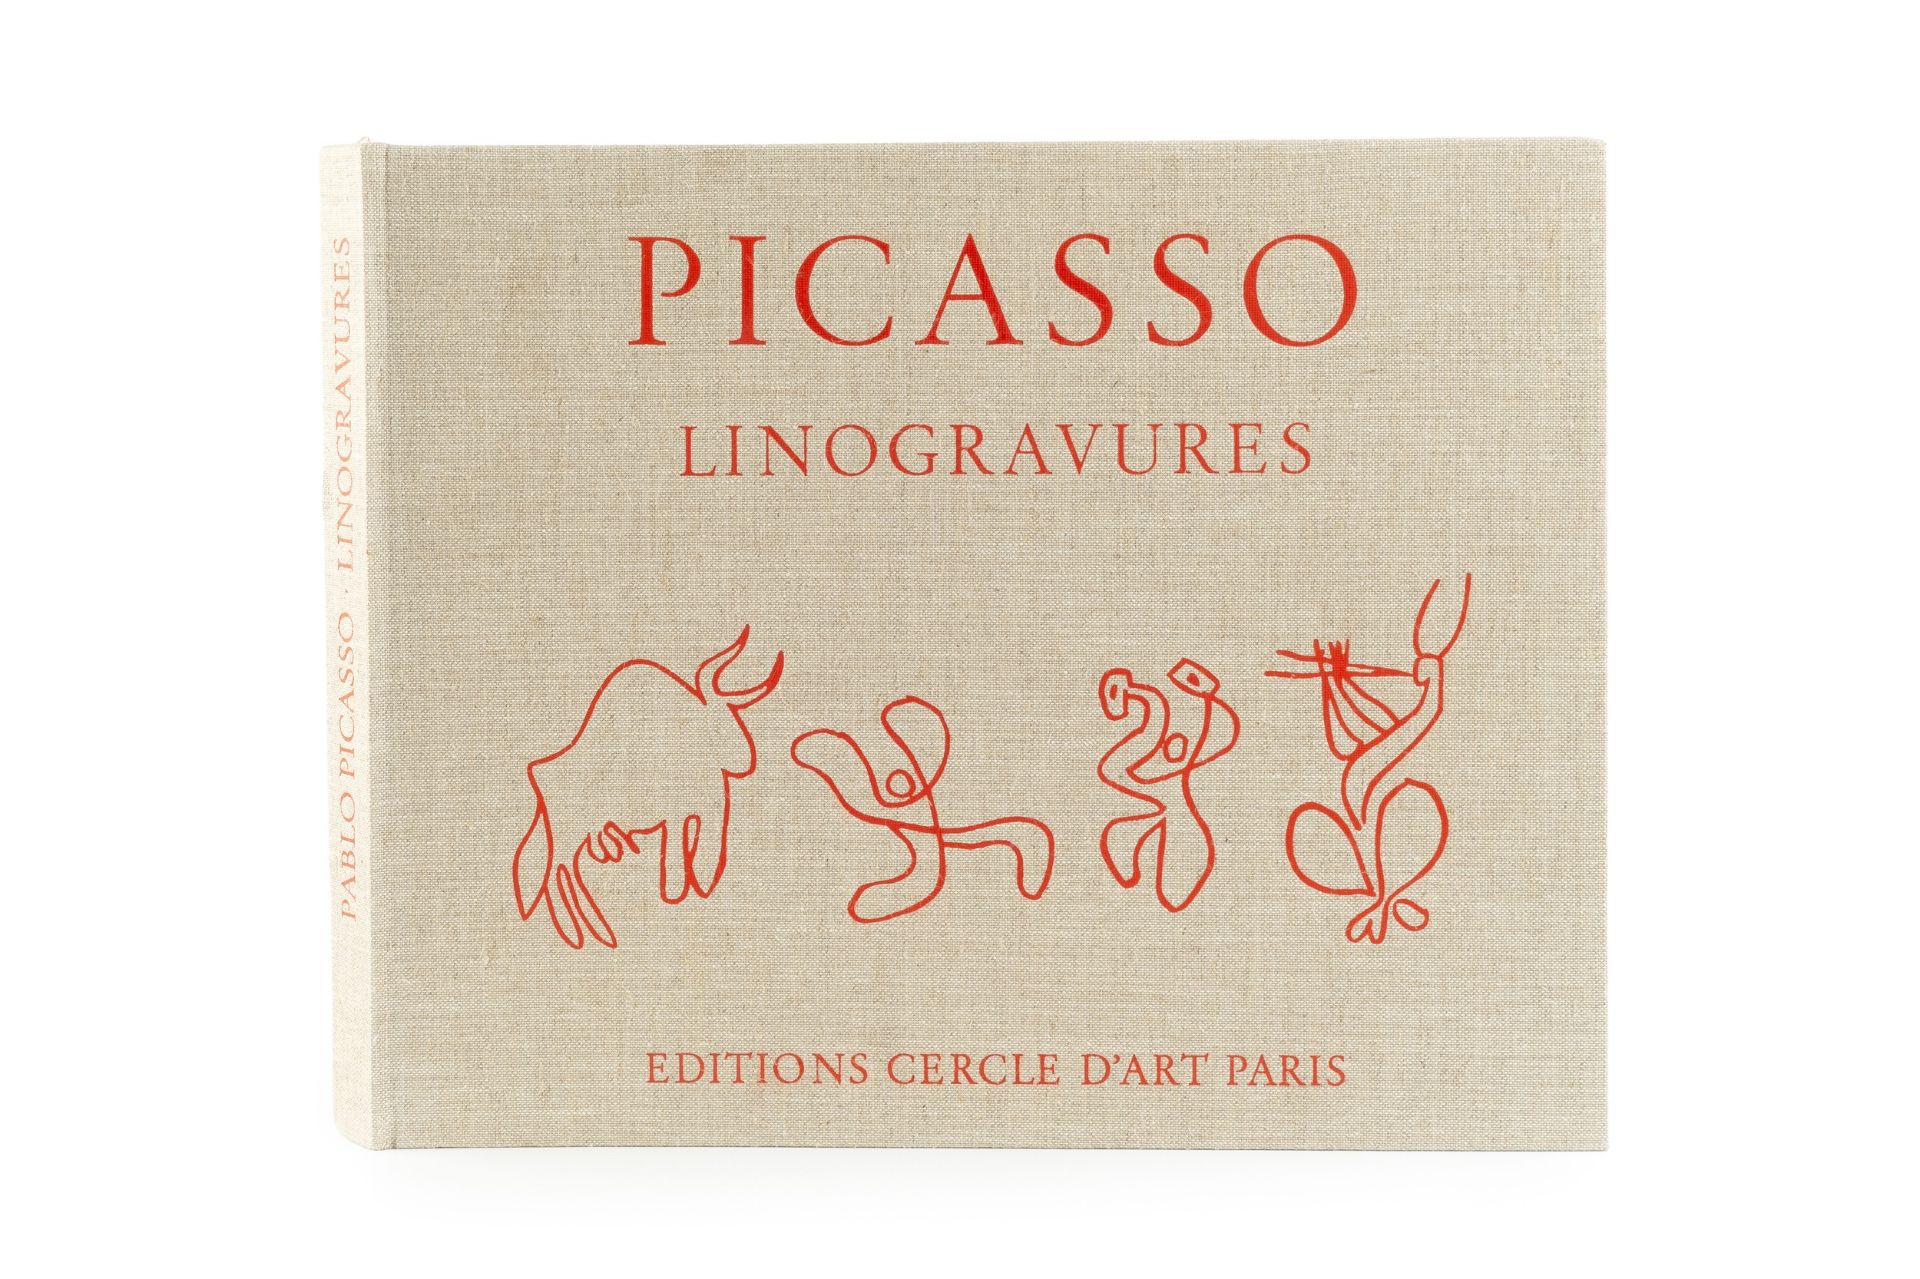 Pablo Picasso (1881-1973) Linogravures, 1962 published by editions circle d'art Paris comprising